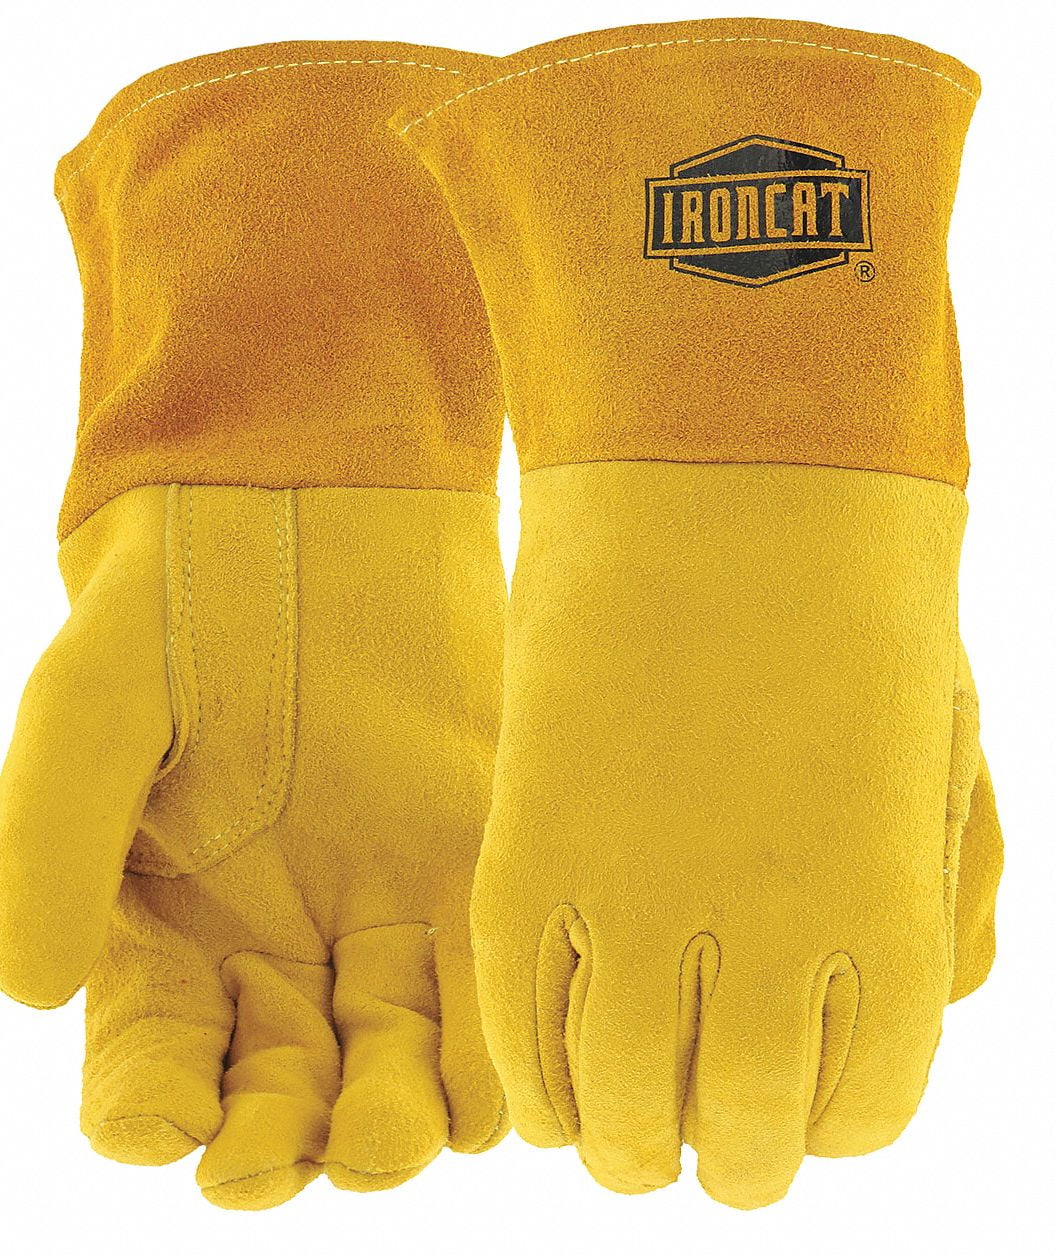 13in.L Welding Gloves Flame Retardant PR 